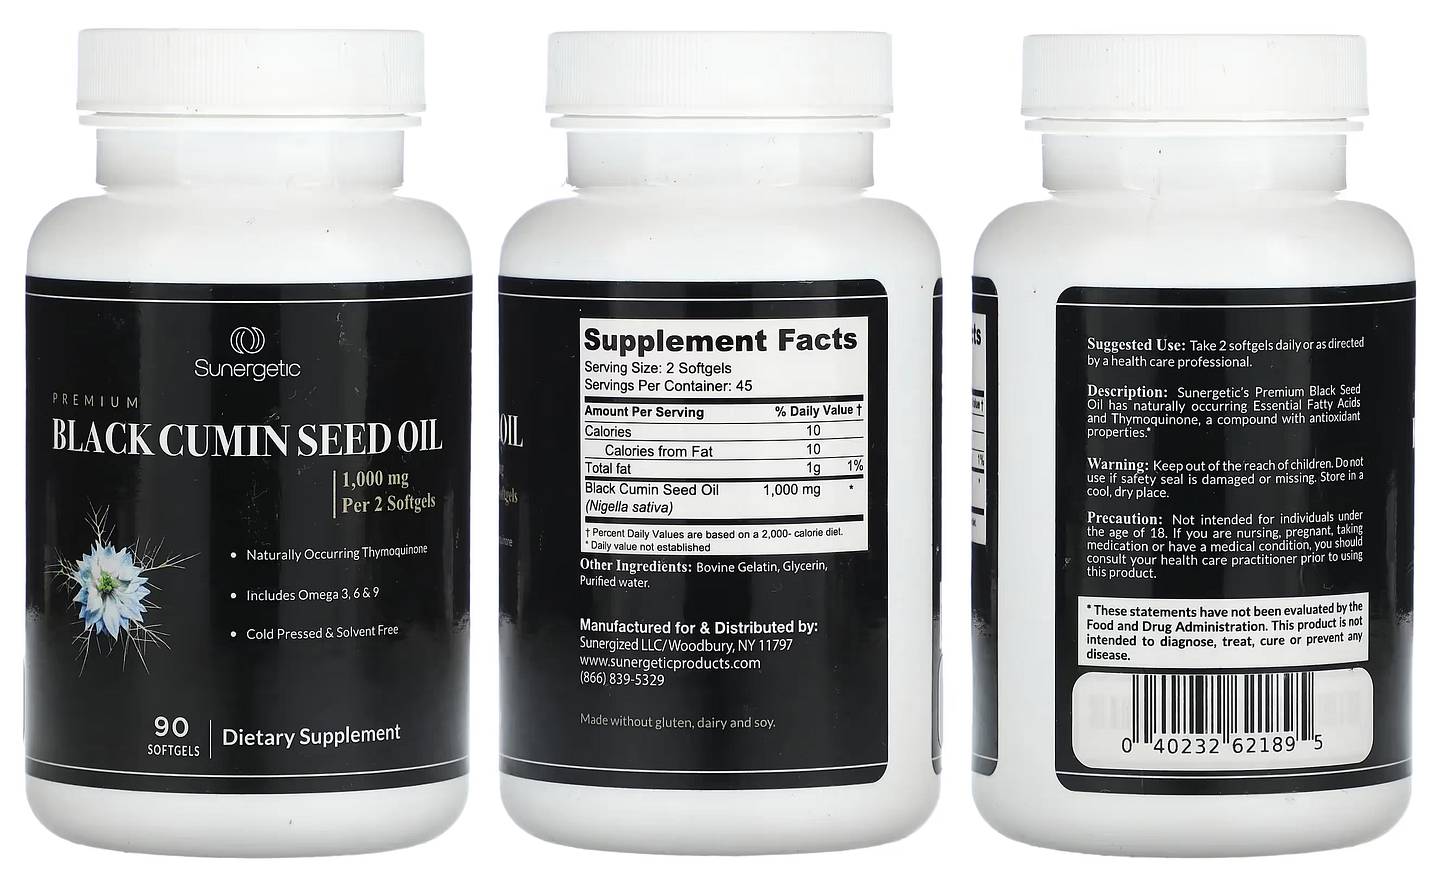 Sunergetic, Premium Black Cumin Seed Oil packaging